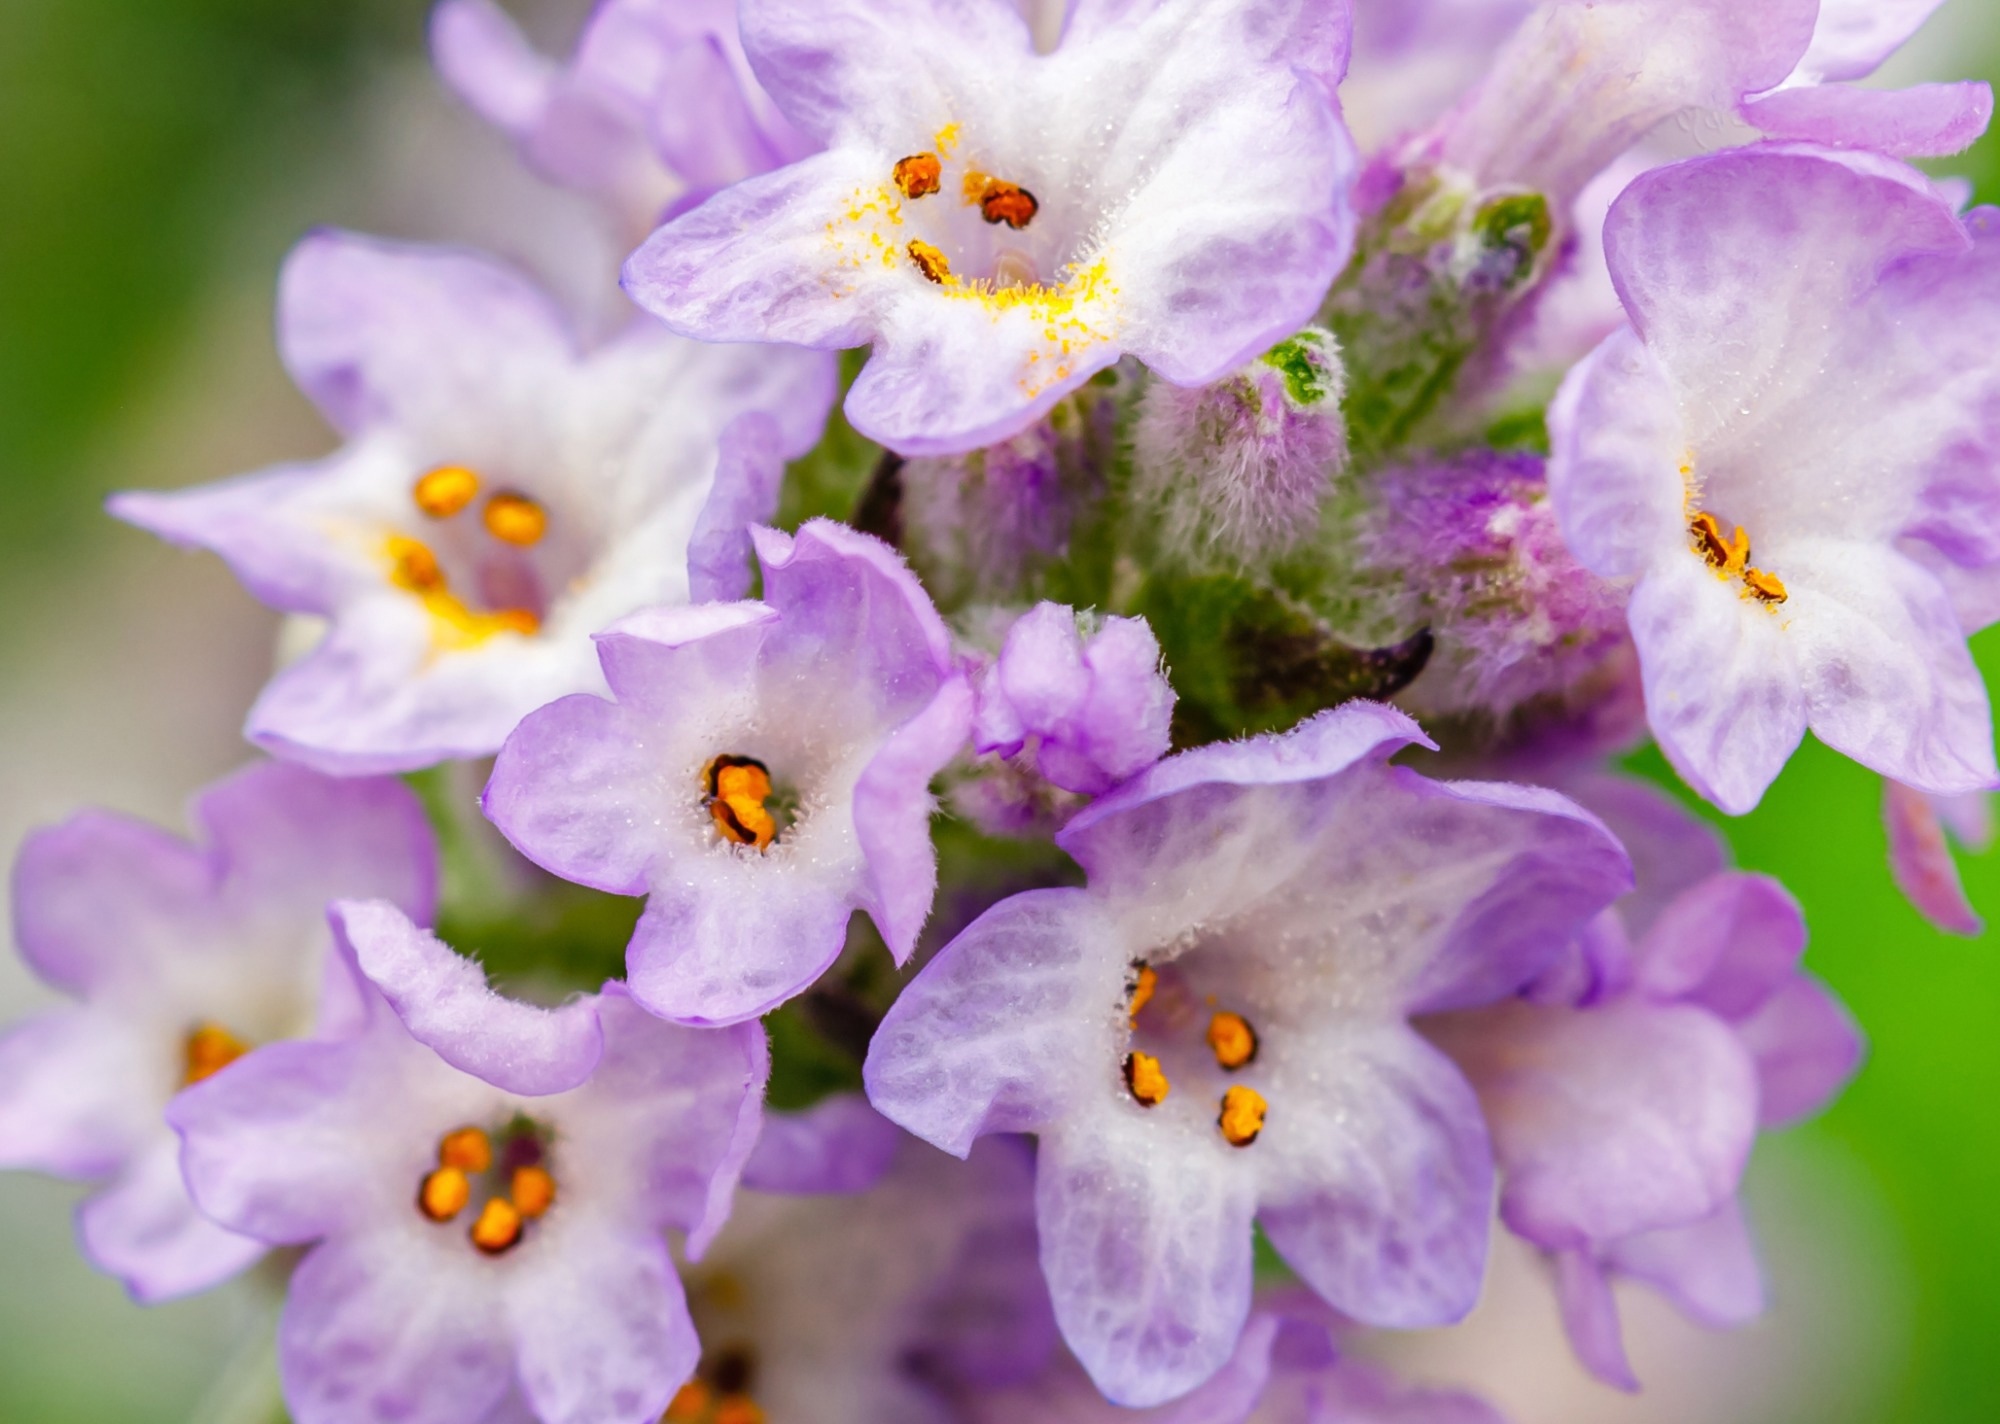 Lavandula angustifolia flowers. Image Credit: nnattalli / Shutterstock